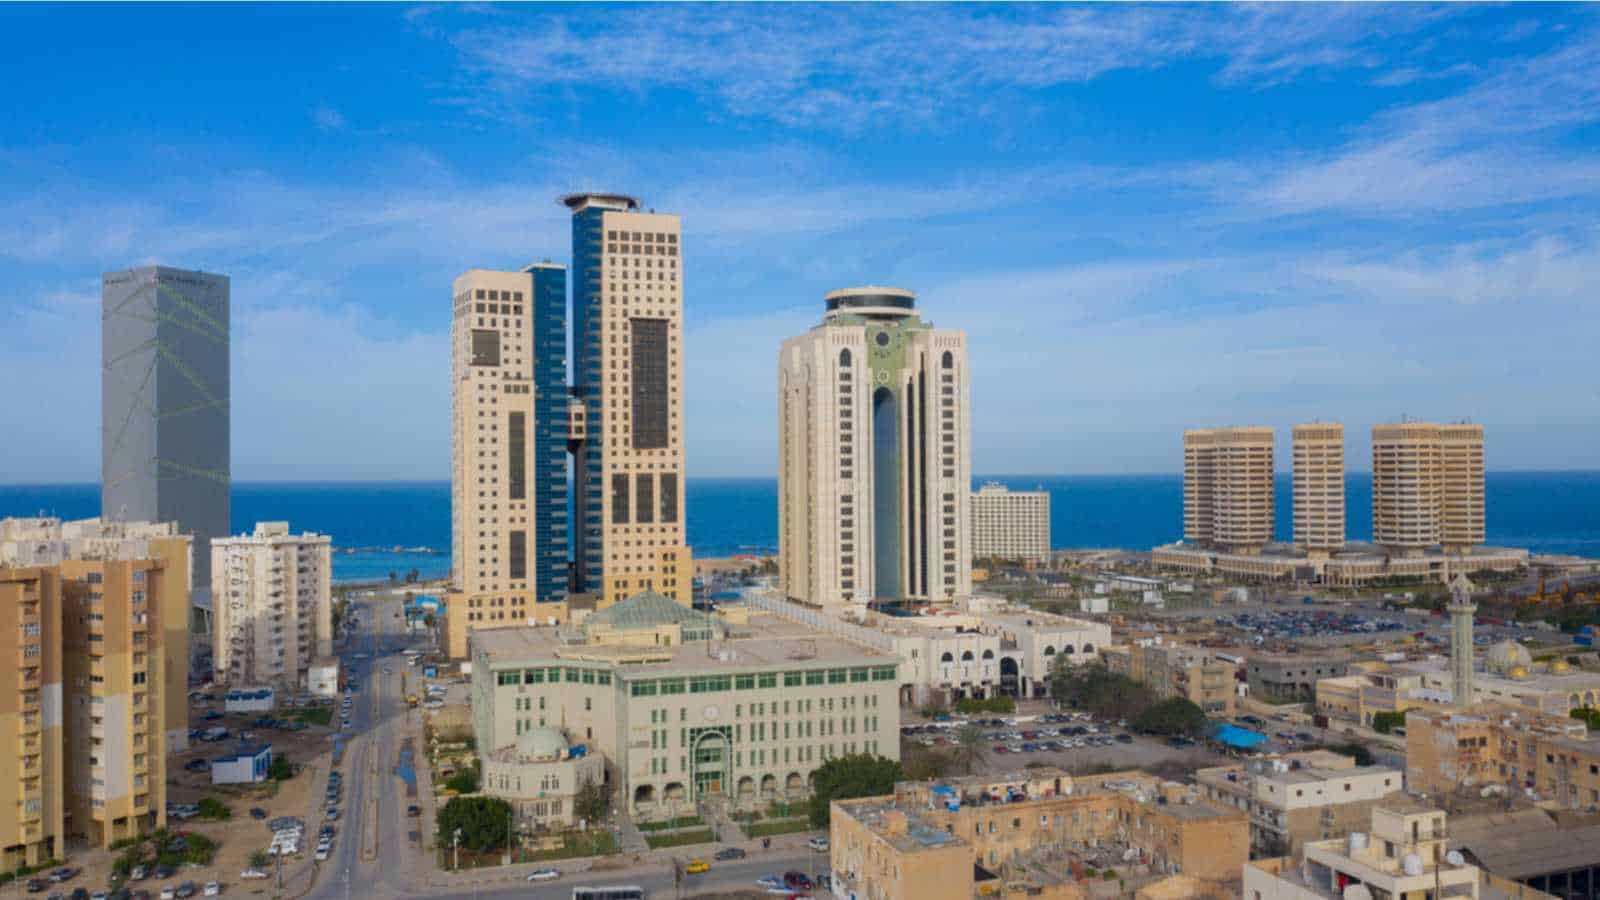 Tripoli, Libya - December 27, 2020: Capital of Libya, Tripoli seafront skyline view.